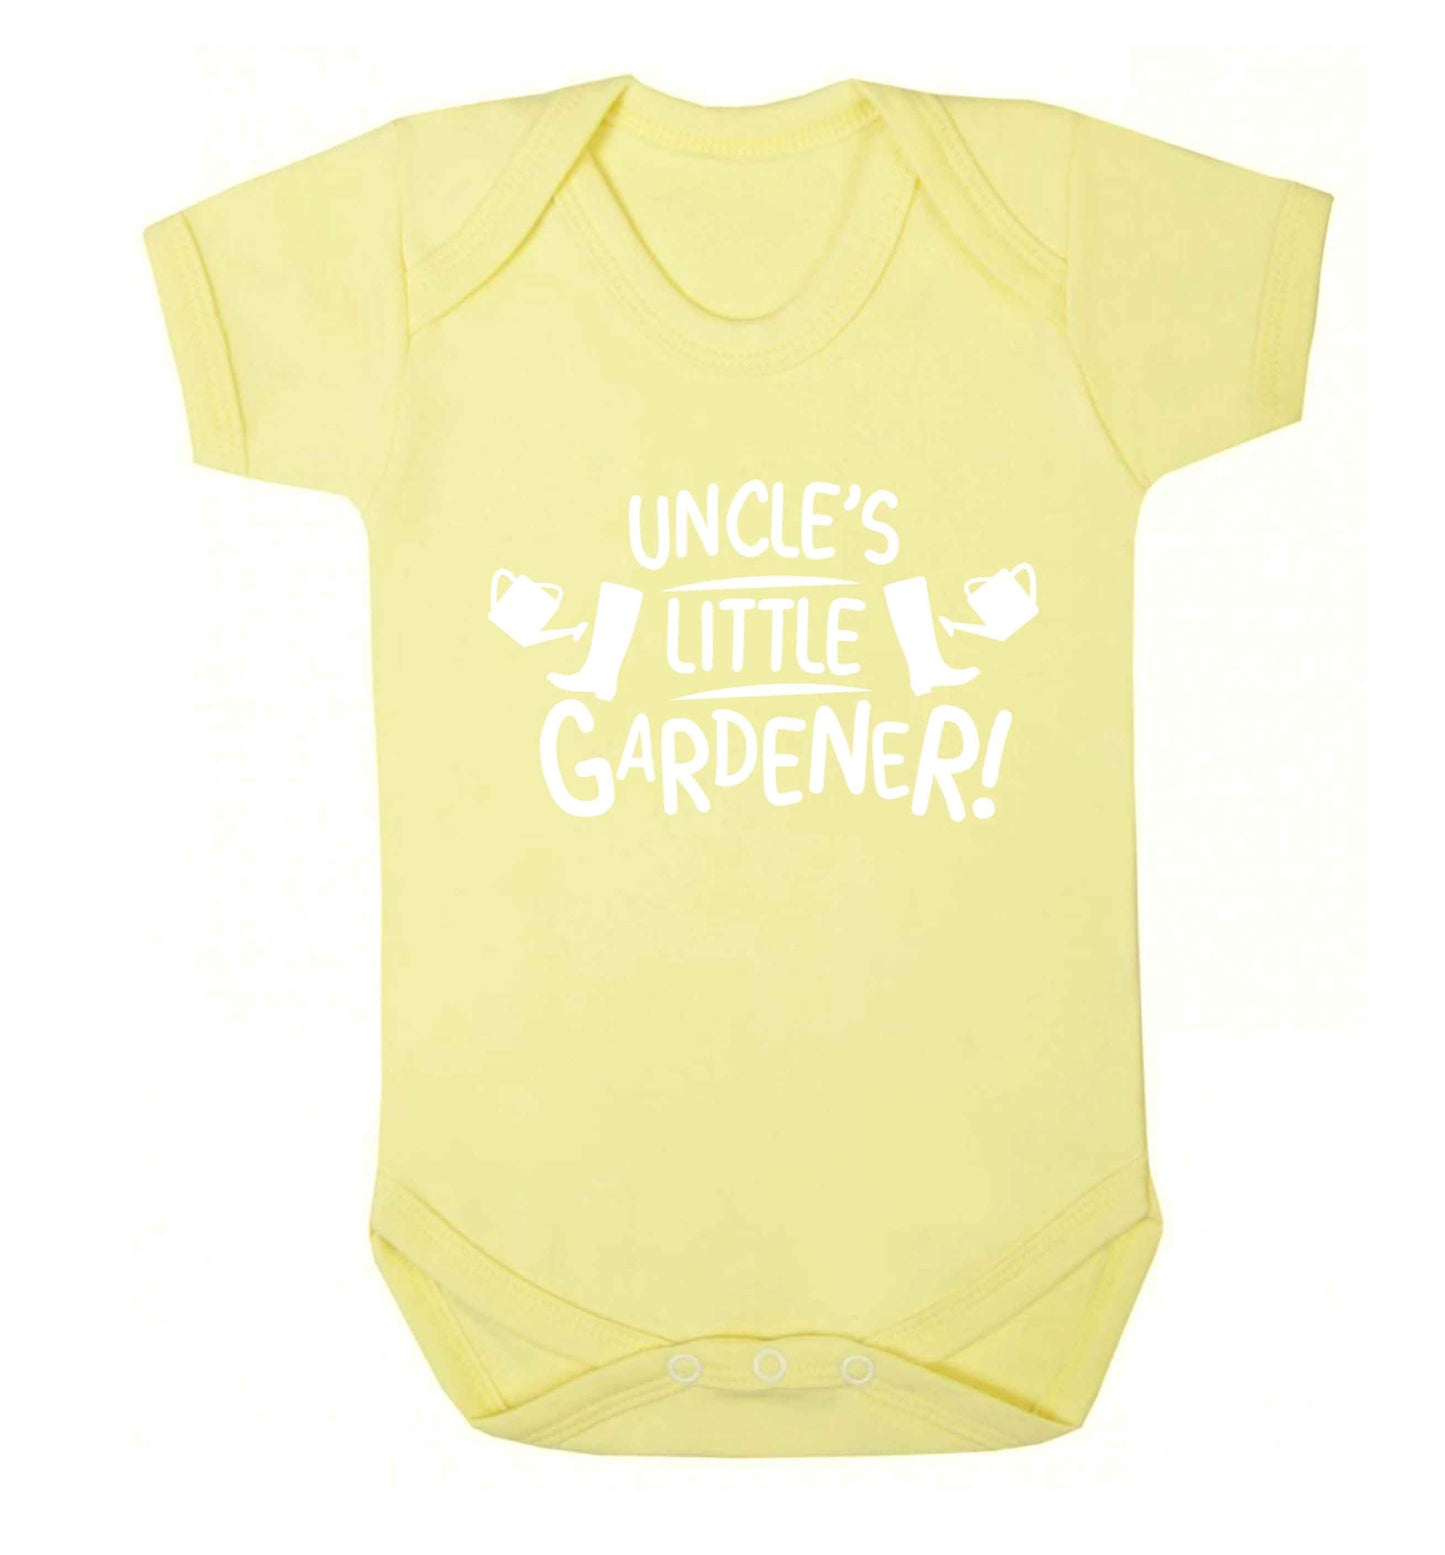 Uncle's little gardener Baby Vest pale yellow 18-24 months